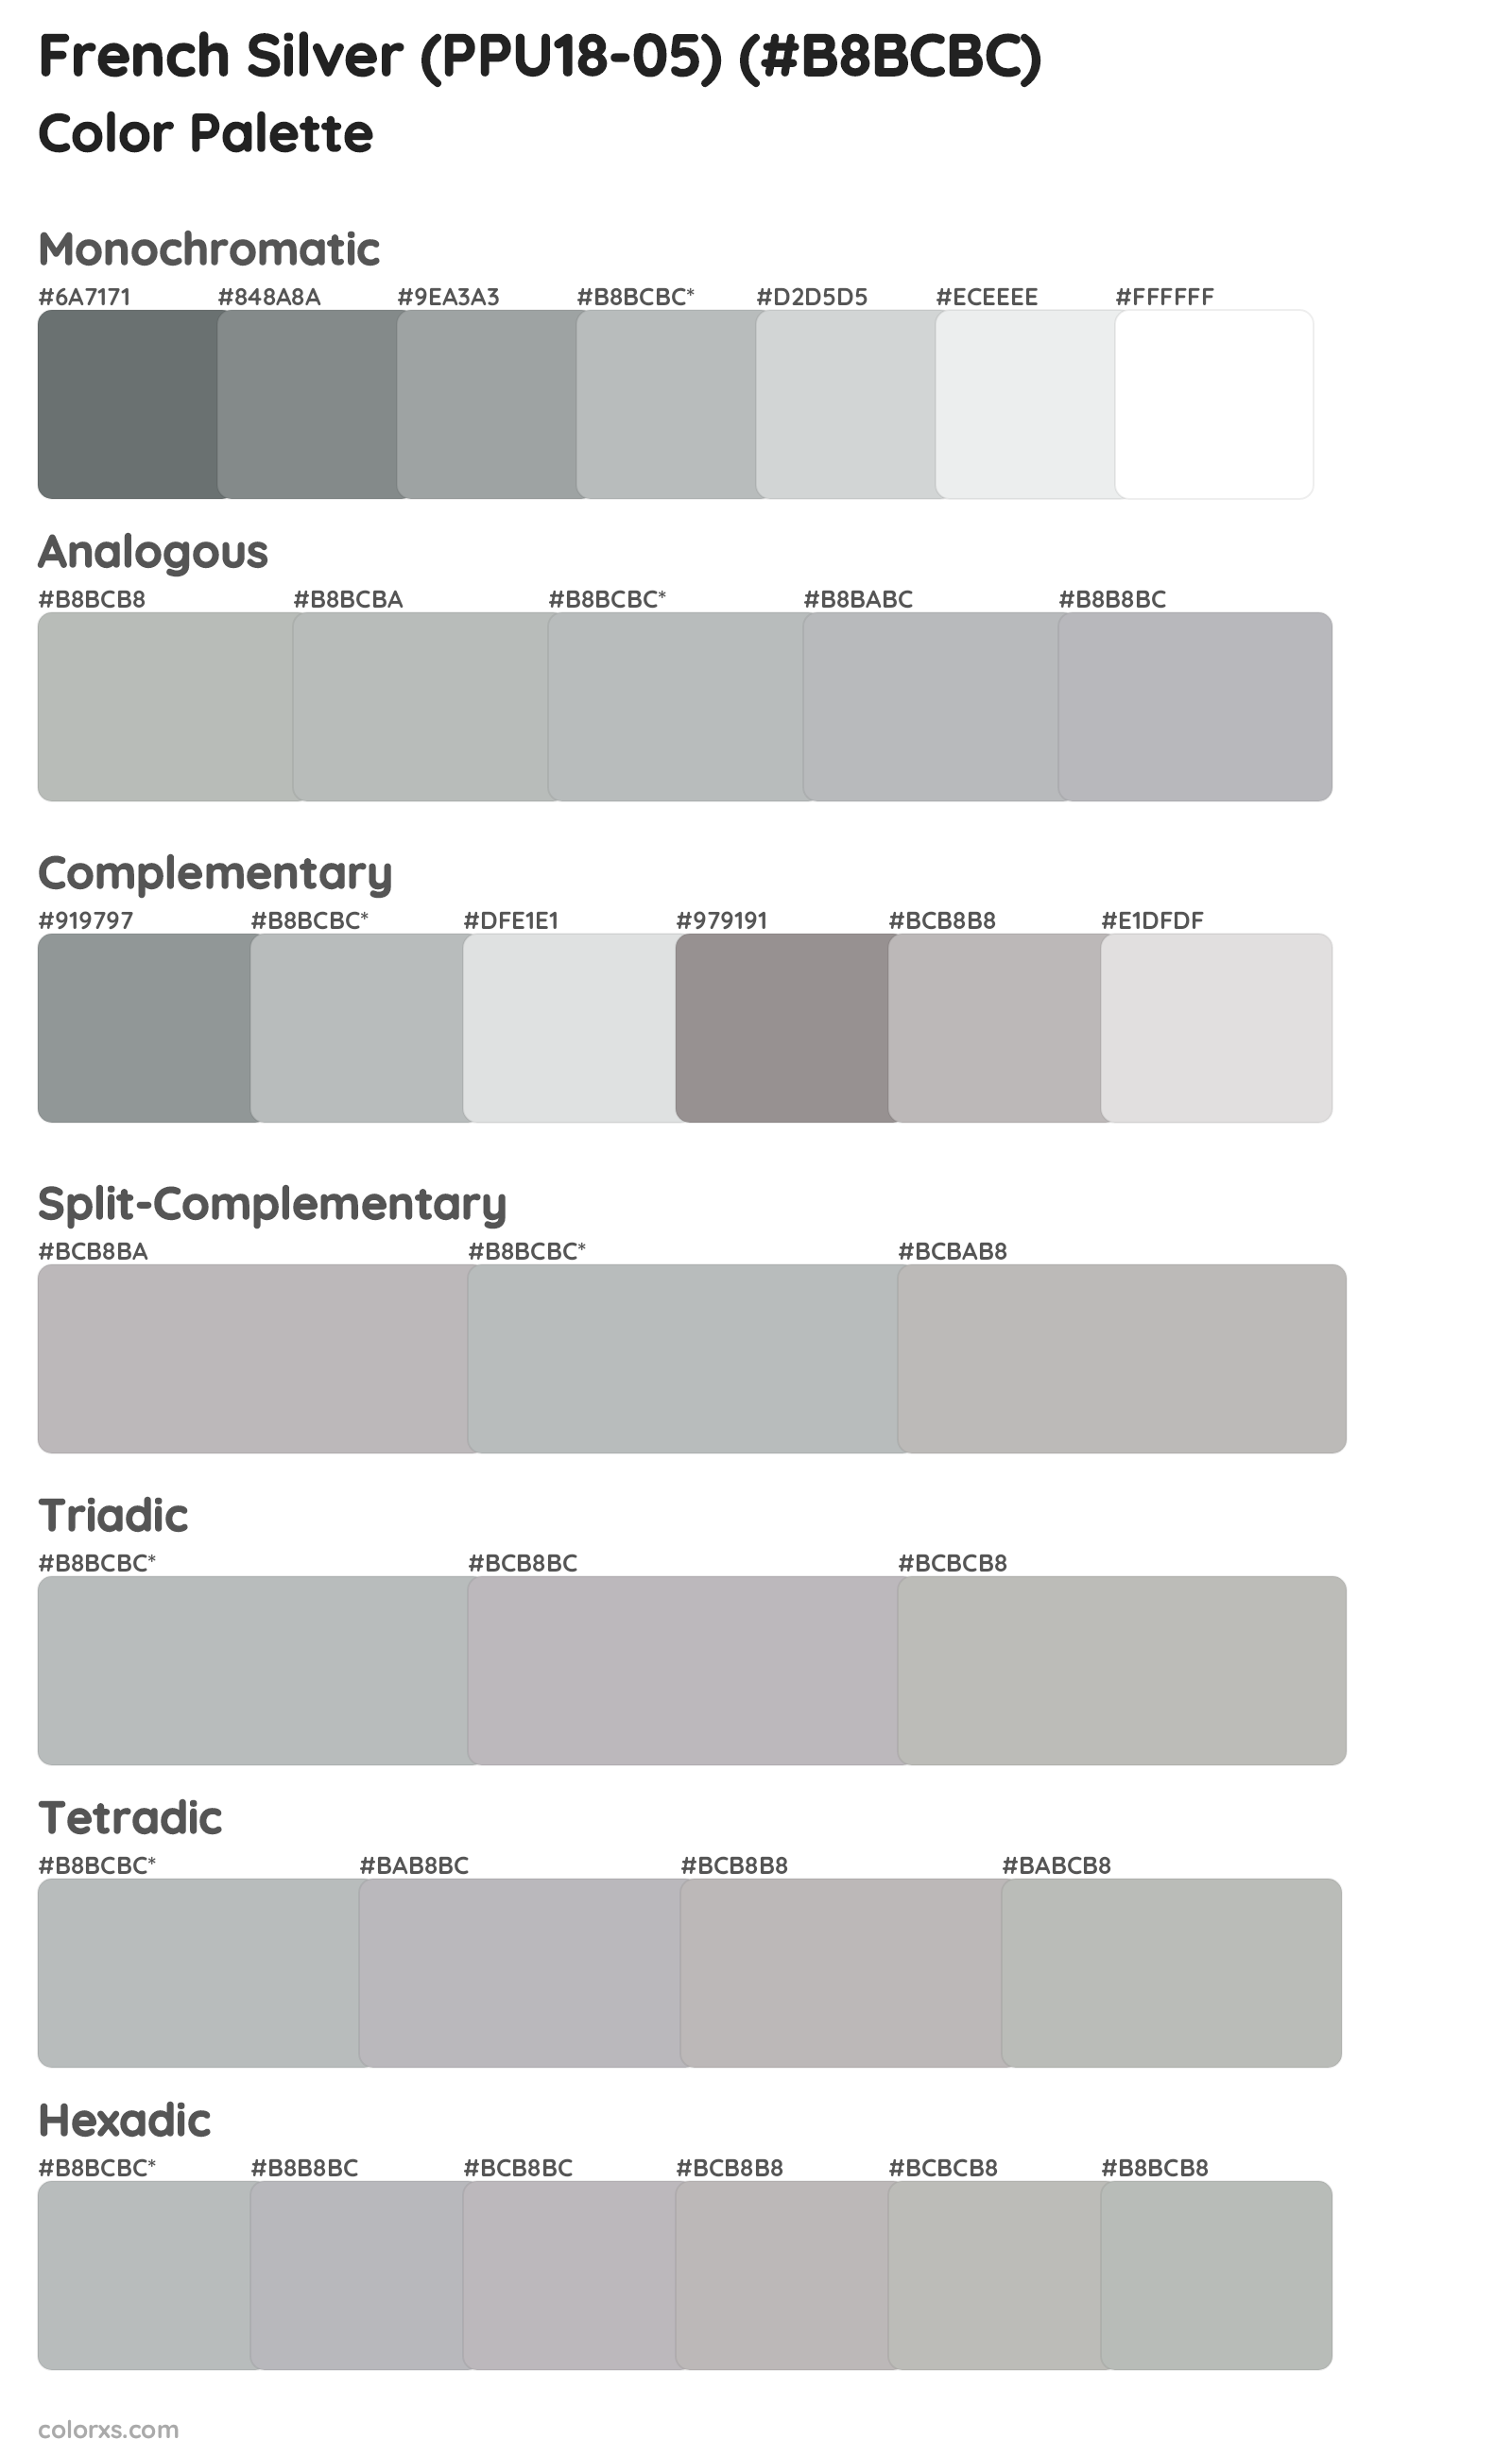 French Silver (PPU18-05) Color Scheme Palettes